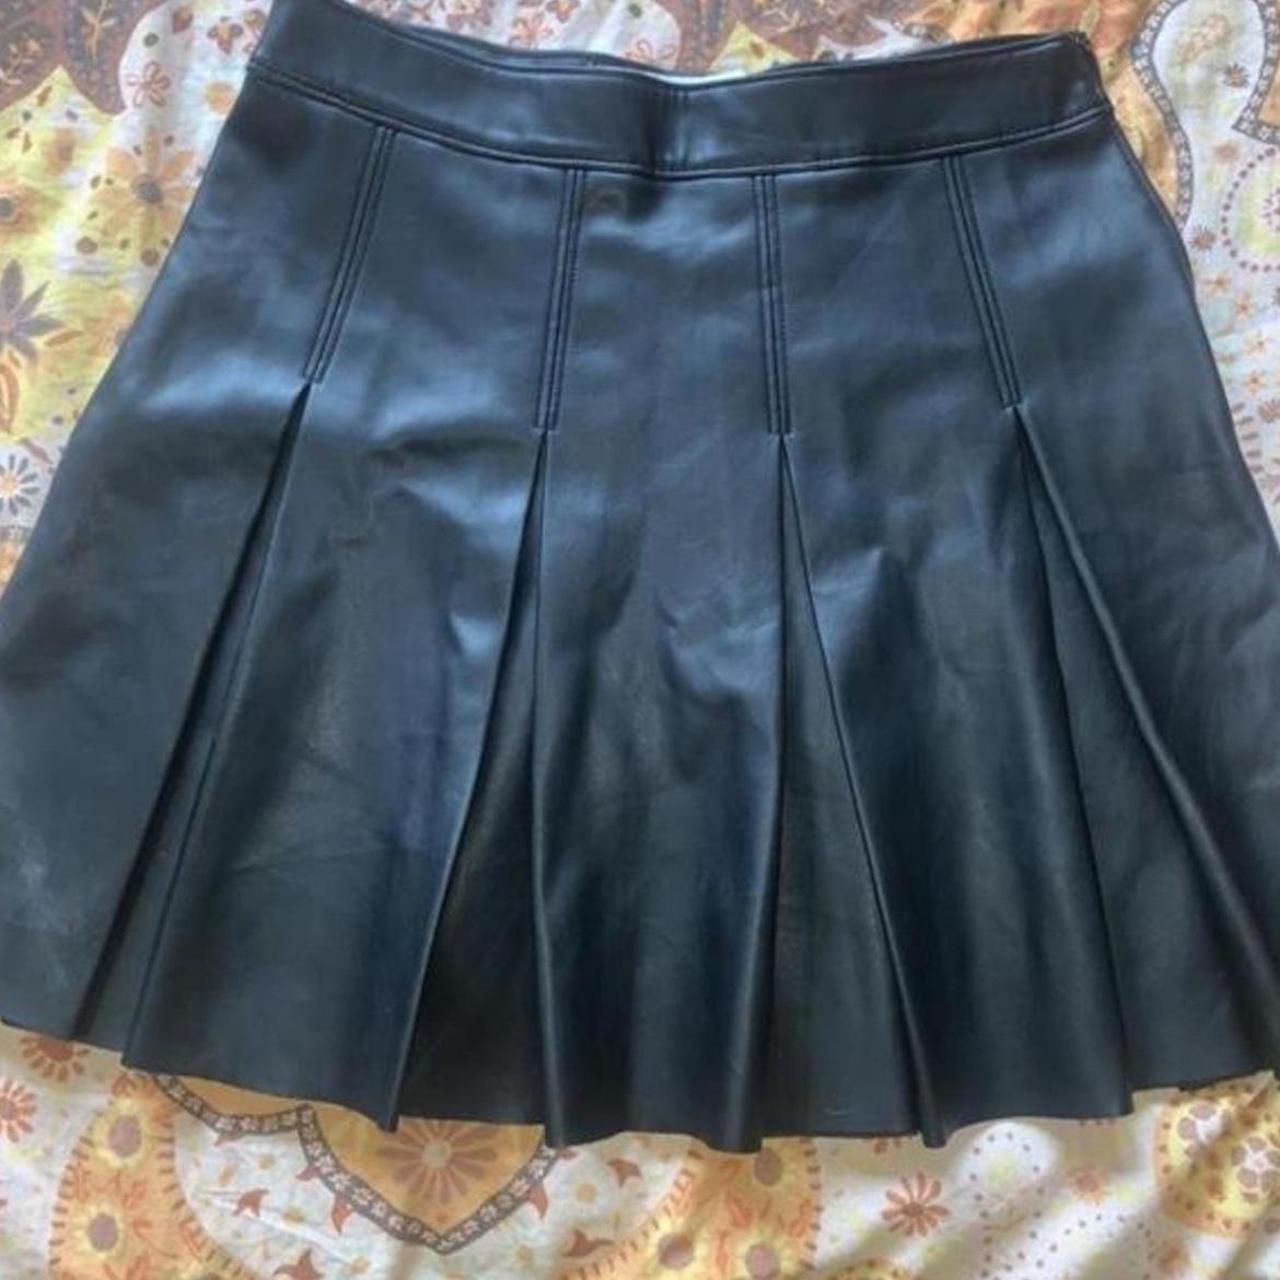 Black leather hollister pleated skirt. Never worn.... - Depop